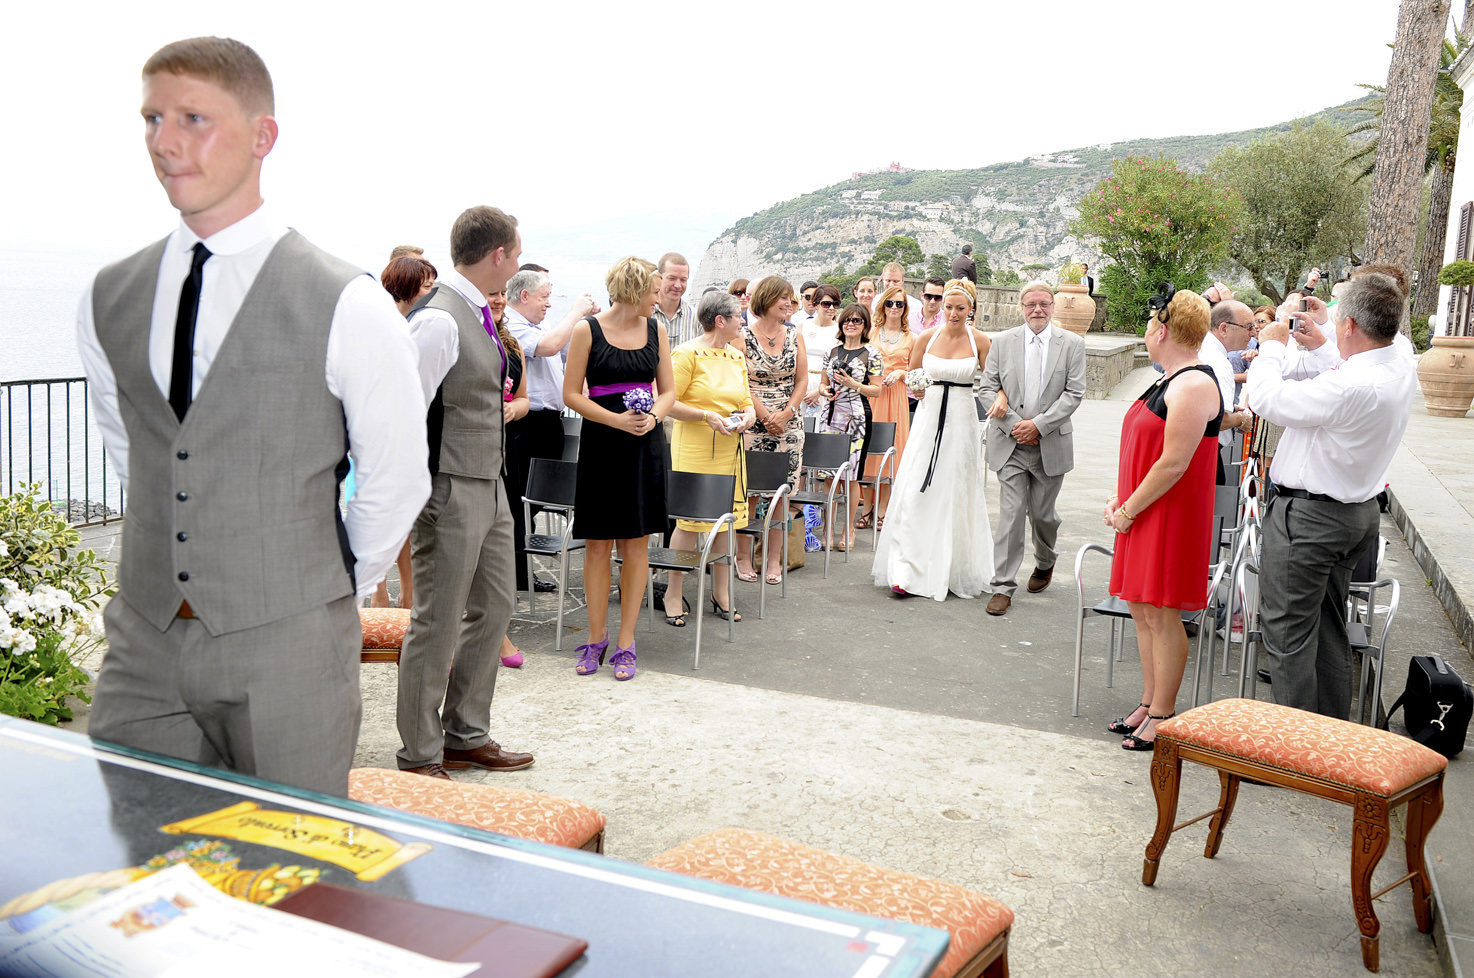 Outdoor civil ceremony in Sorrento